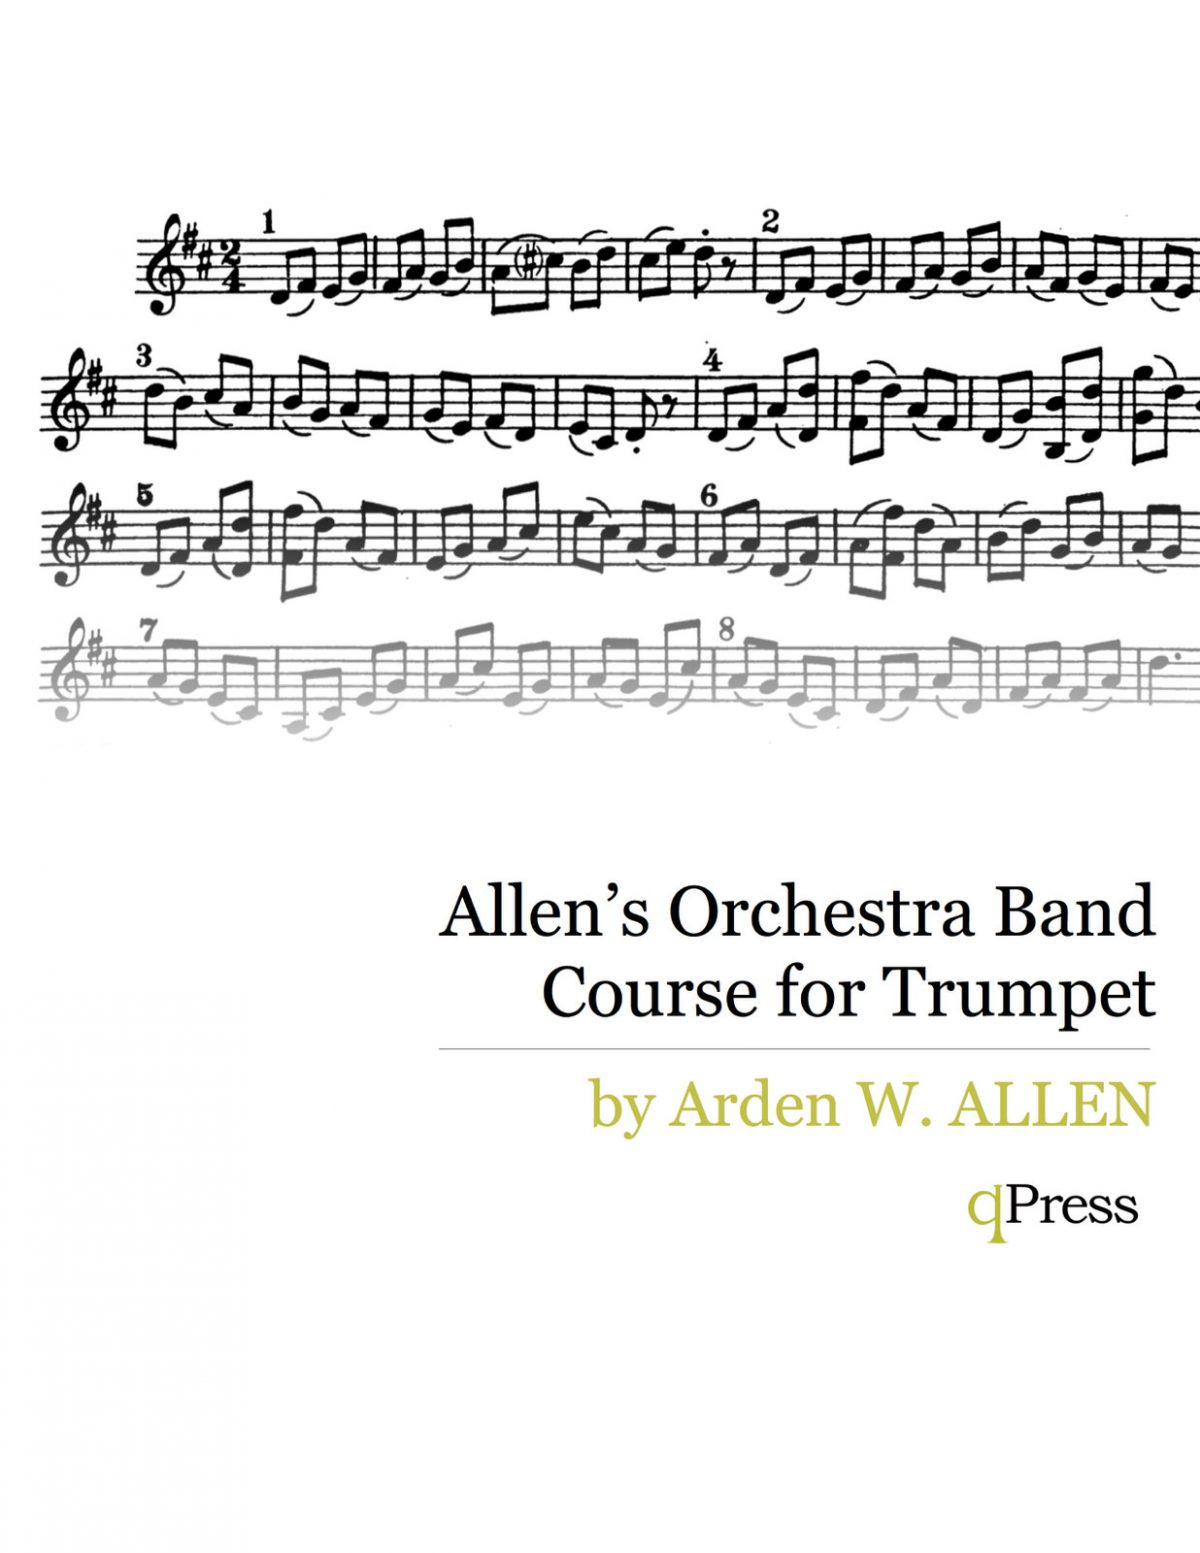 Allen, Arden, Allen's Orchestra Band Class Course for Trumpet